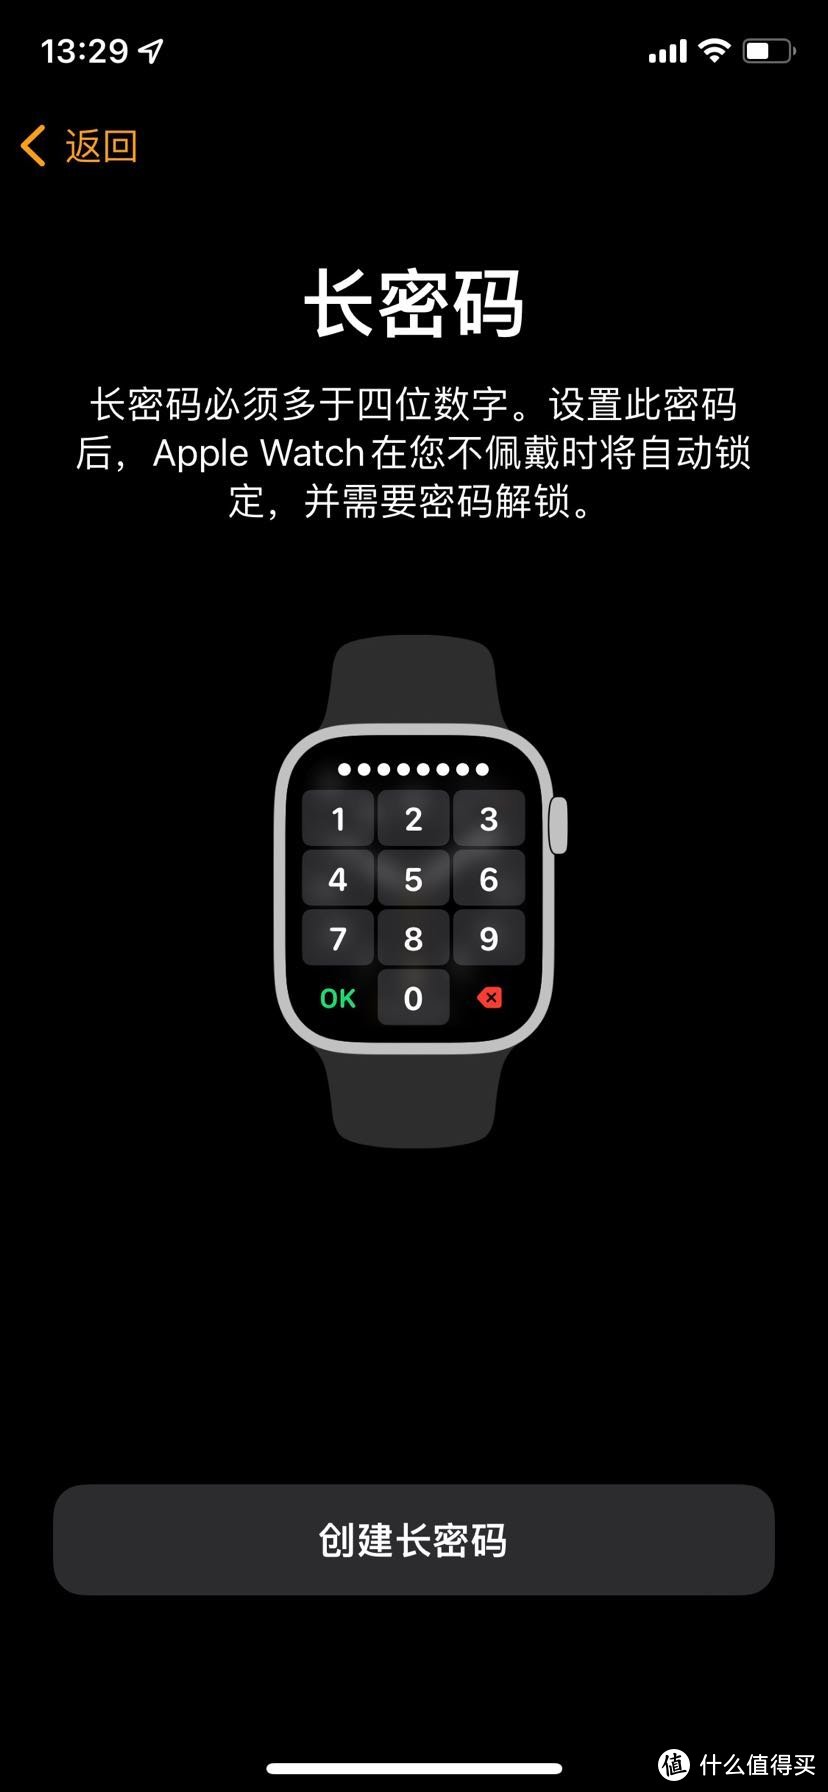 Apple Watch S7详细开箱多图